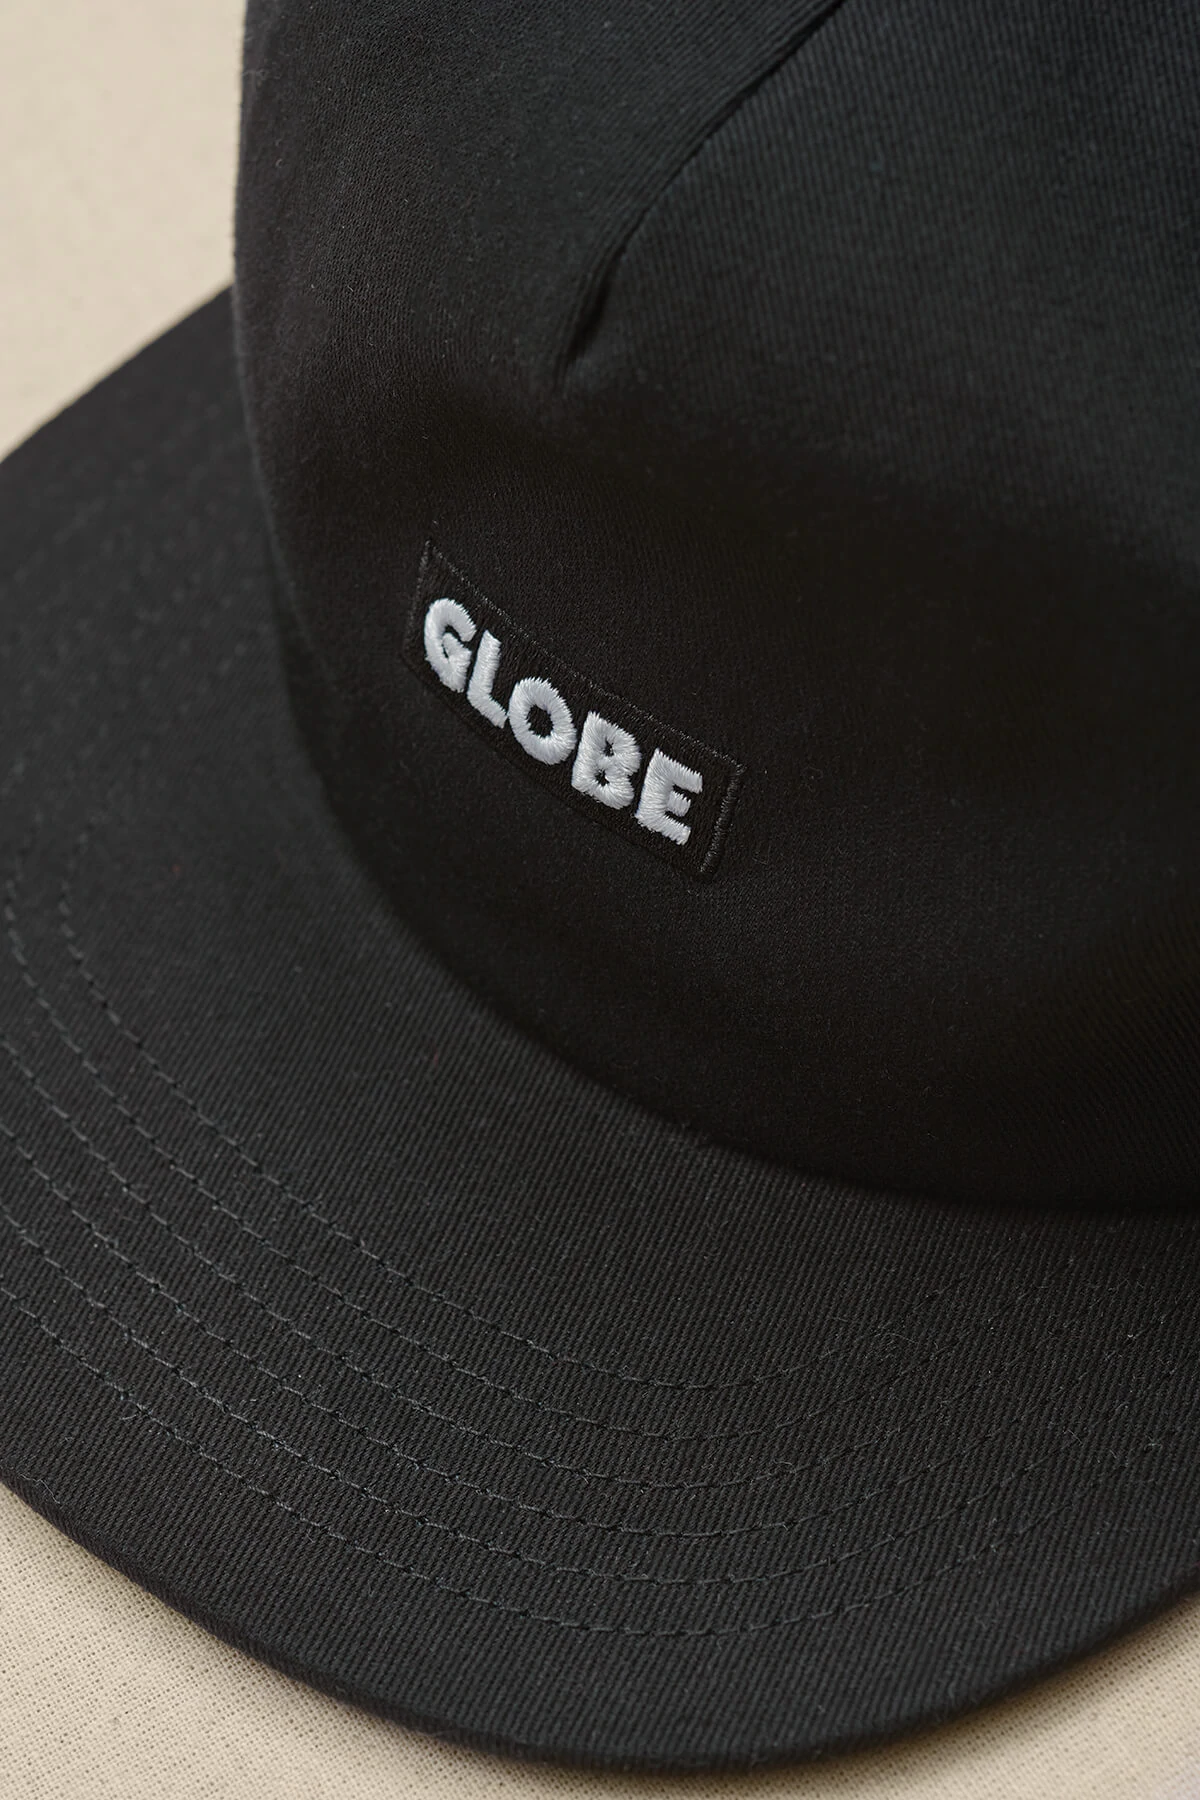 Globe LV cap washed black